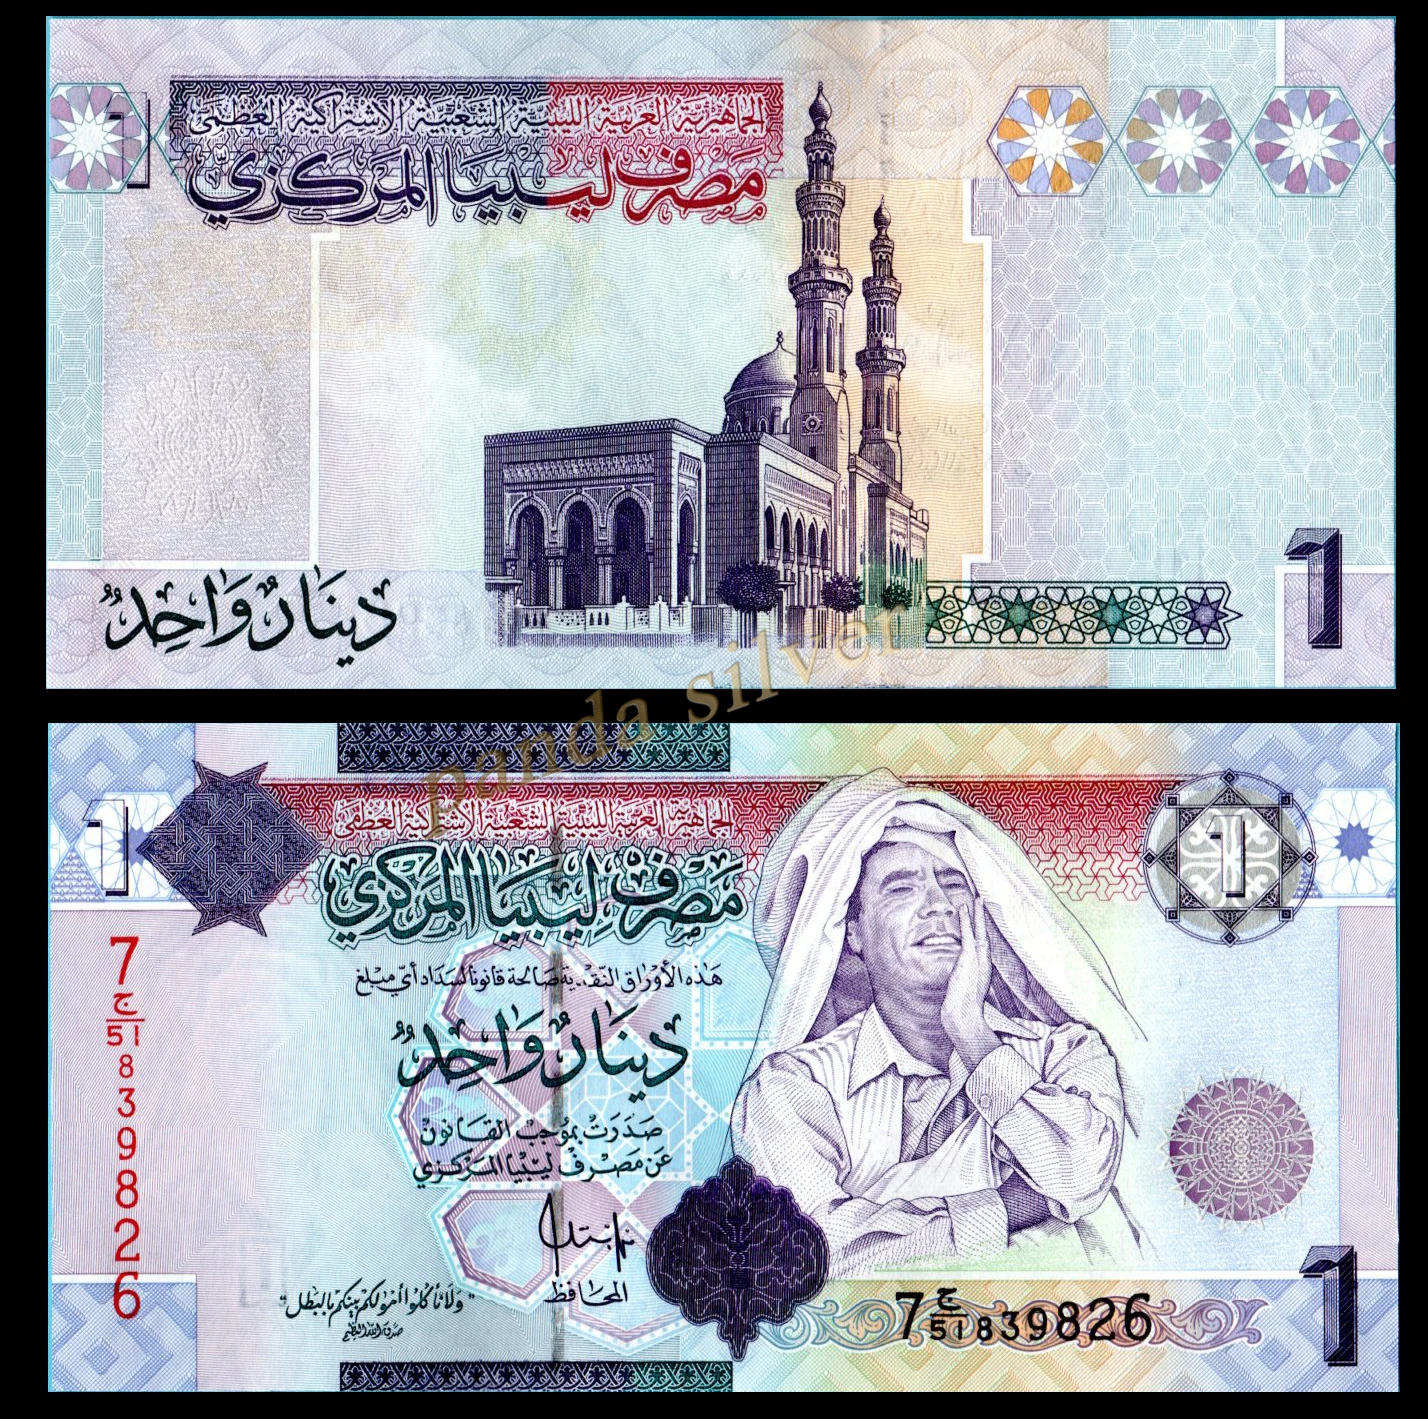 2004 LIBYA 1 DINAR ND P68 UNCIRCULATED